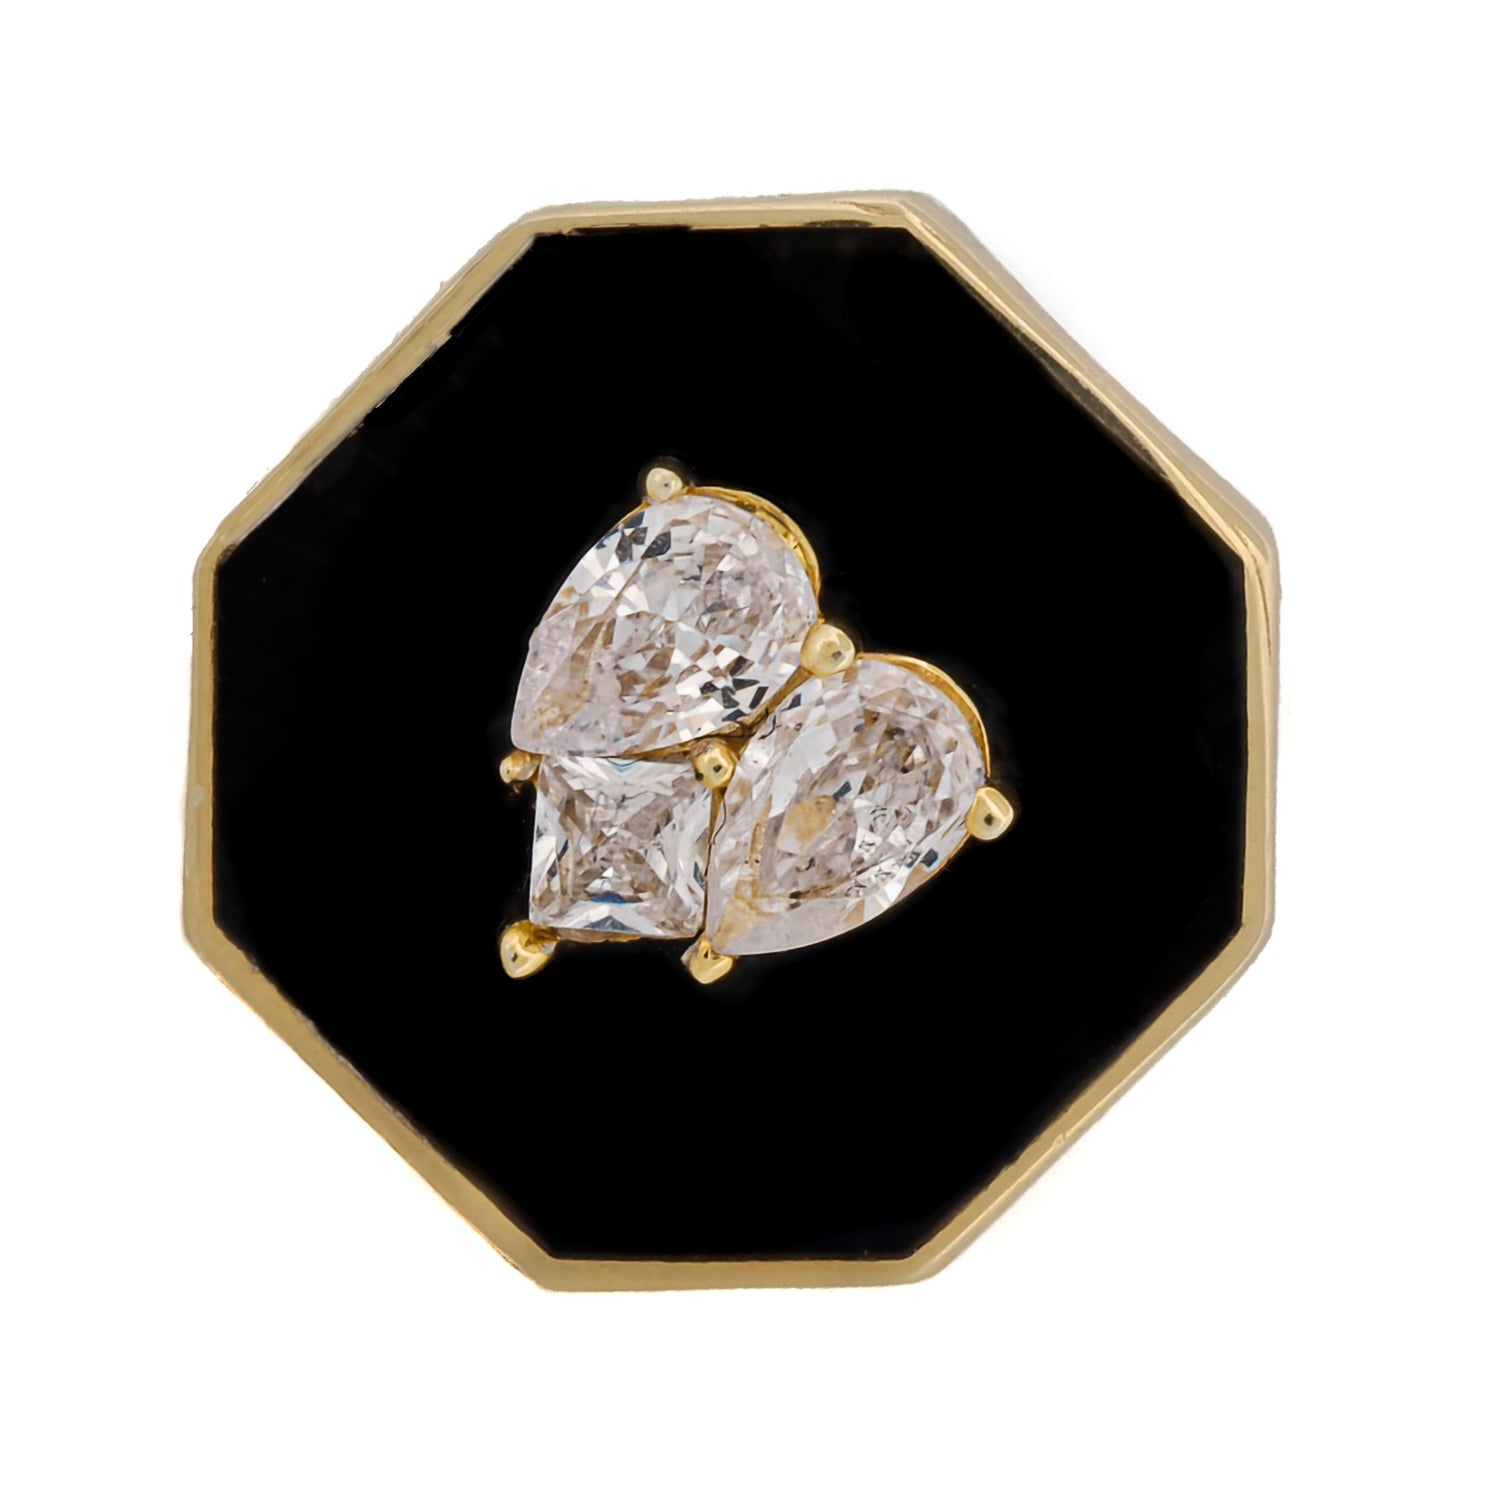 Mesmerizing Beauty: Black Enamel Diamond Heart Adjustable Ring